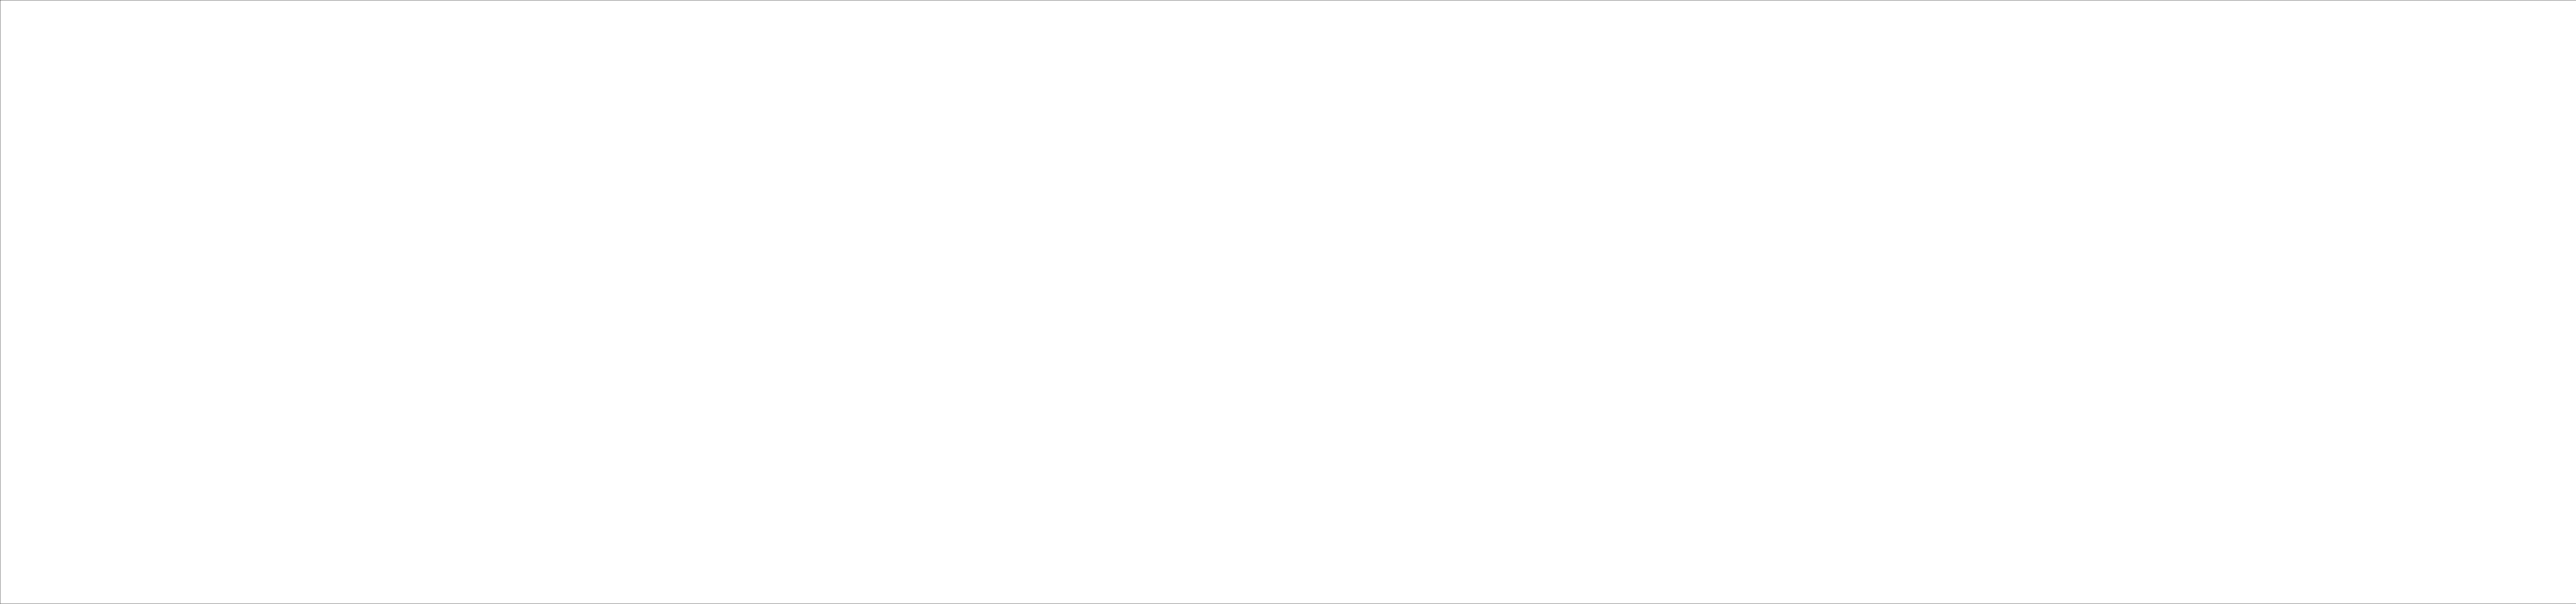 LIGHT_KITS.html